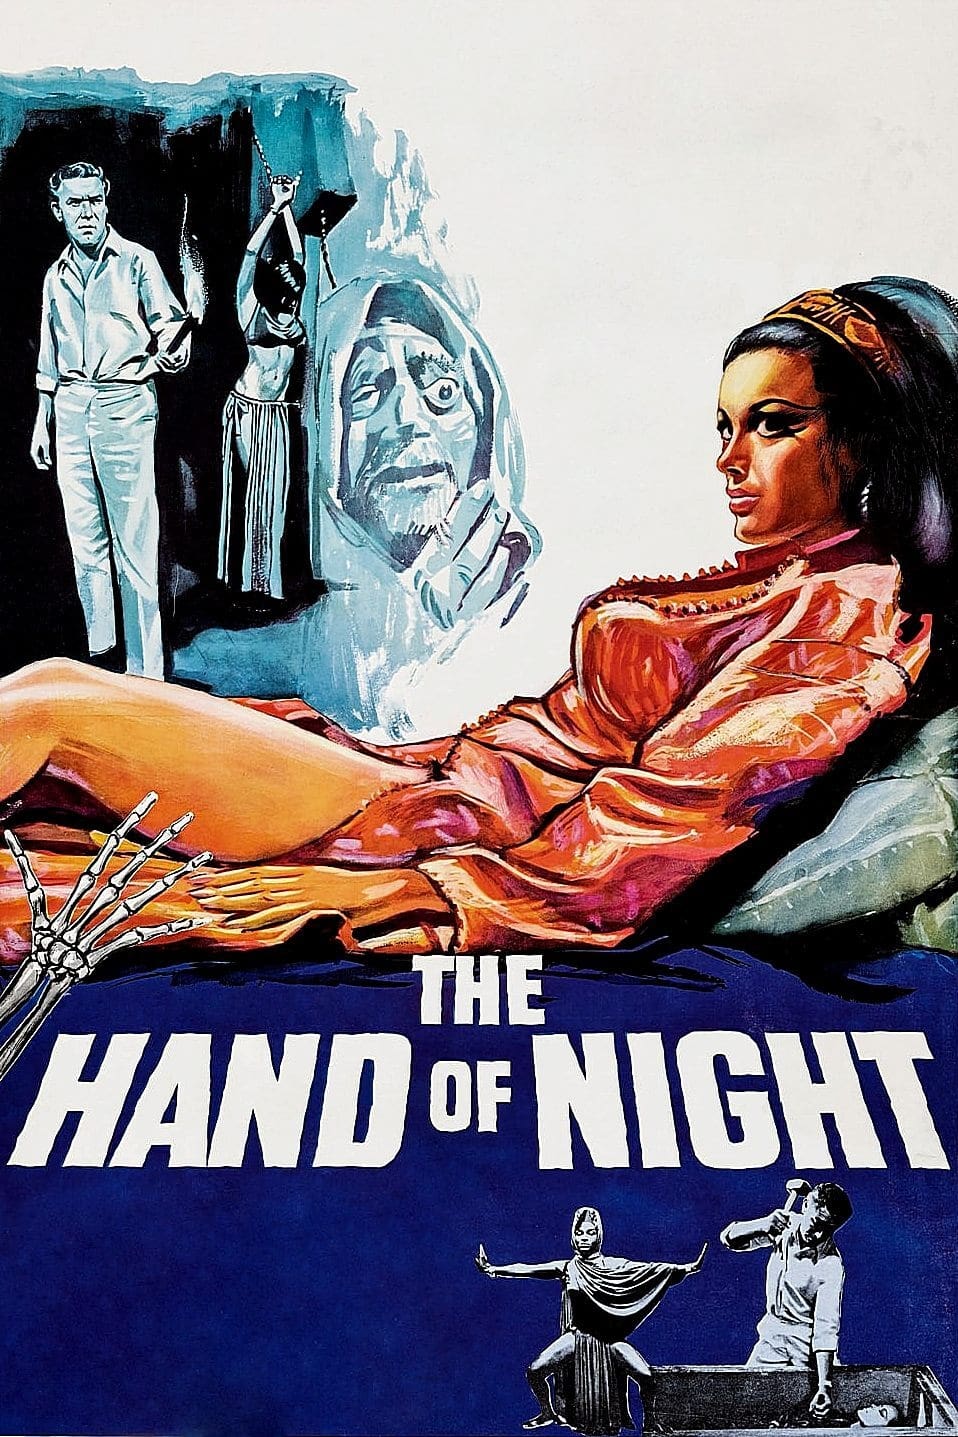 The Hand of Night